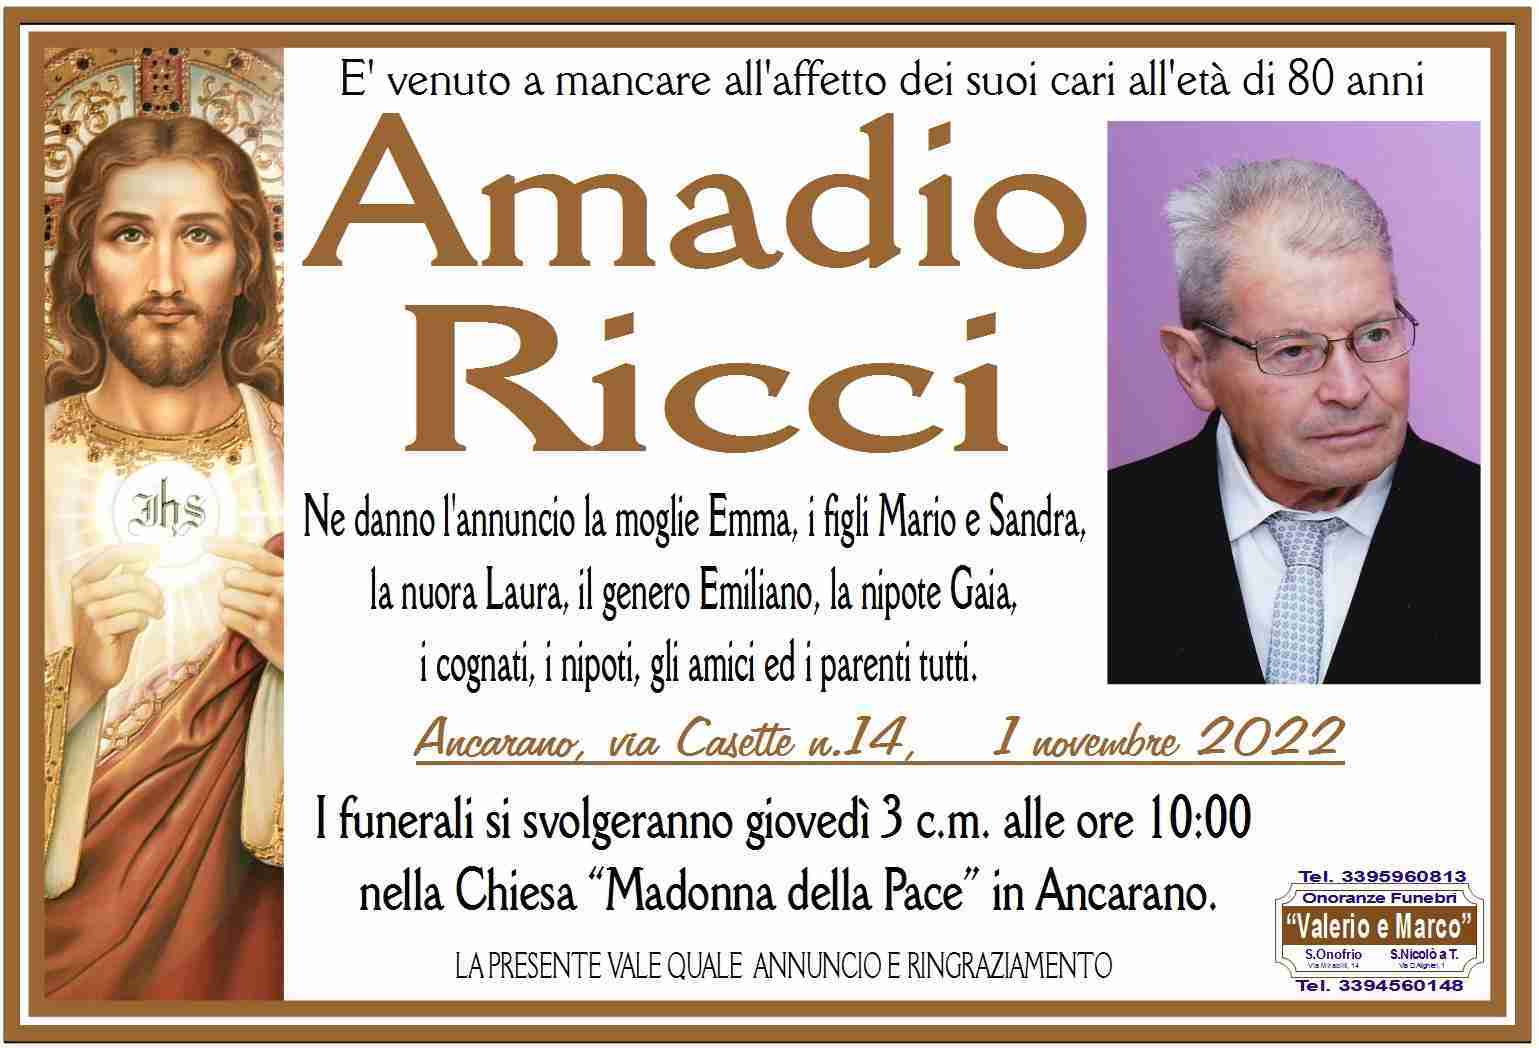 Amadio Ricci